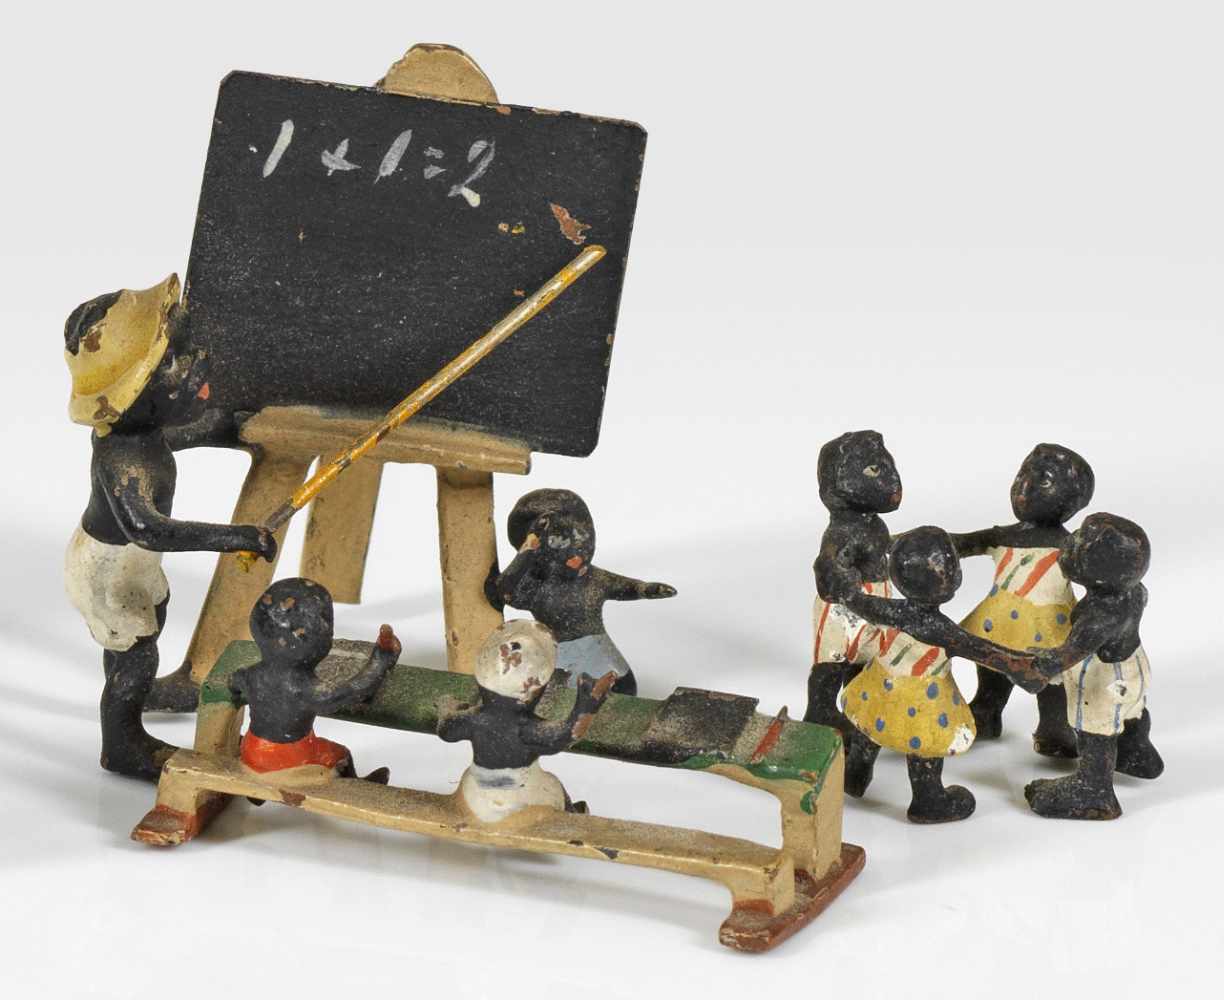 Zwei Miniatur-Figurengruppen mit afrikanischen KindernWiener Bronze, farbig bemalt. Szenische